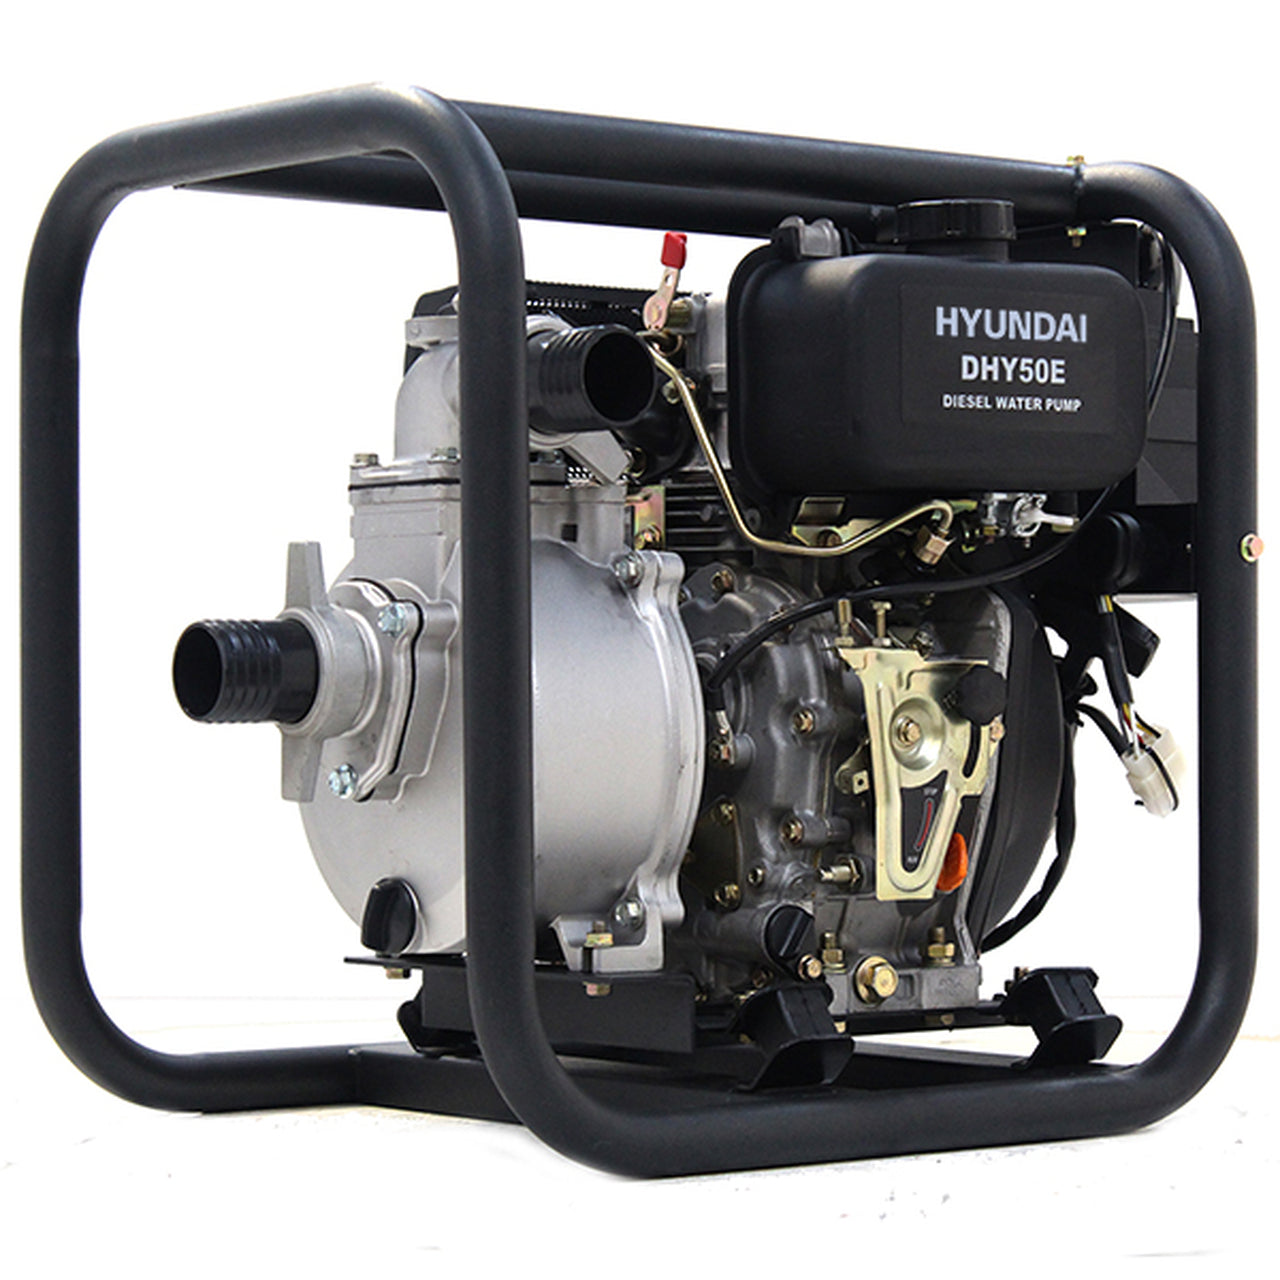 Hyundai-DHY50E-Electric-Start-Diesel-Water-Pump,-50mm